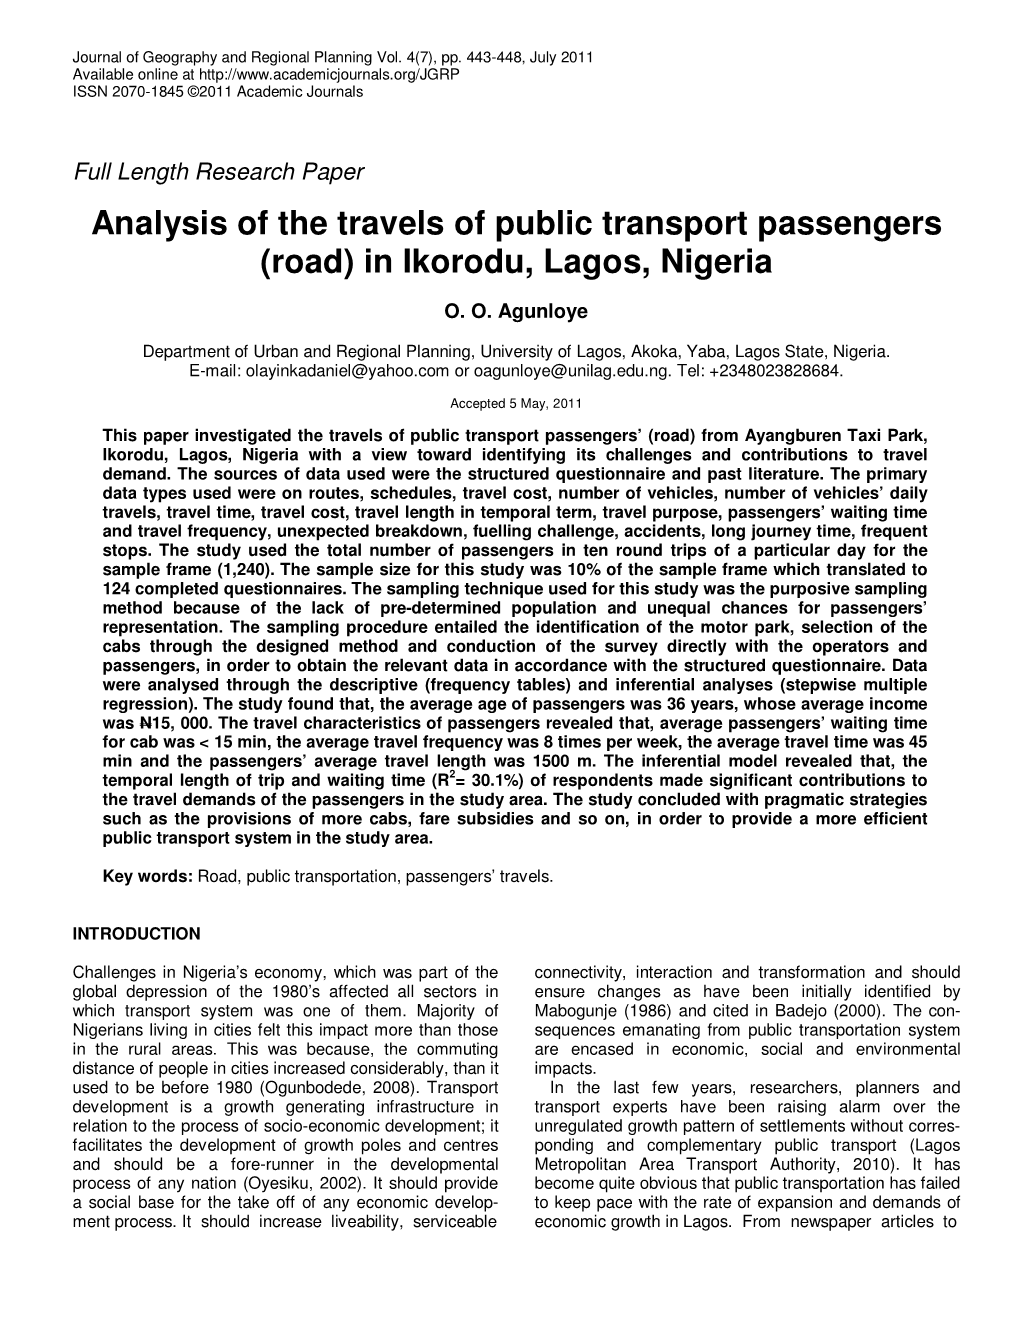 Analysis of the Travels of Public Transport Passengers (Road) in Ikorodu, Lagos, Nigeria